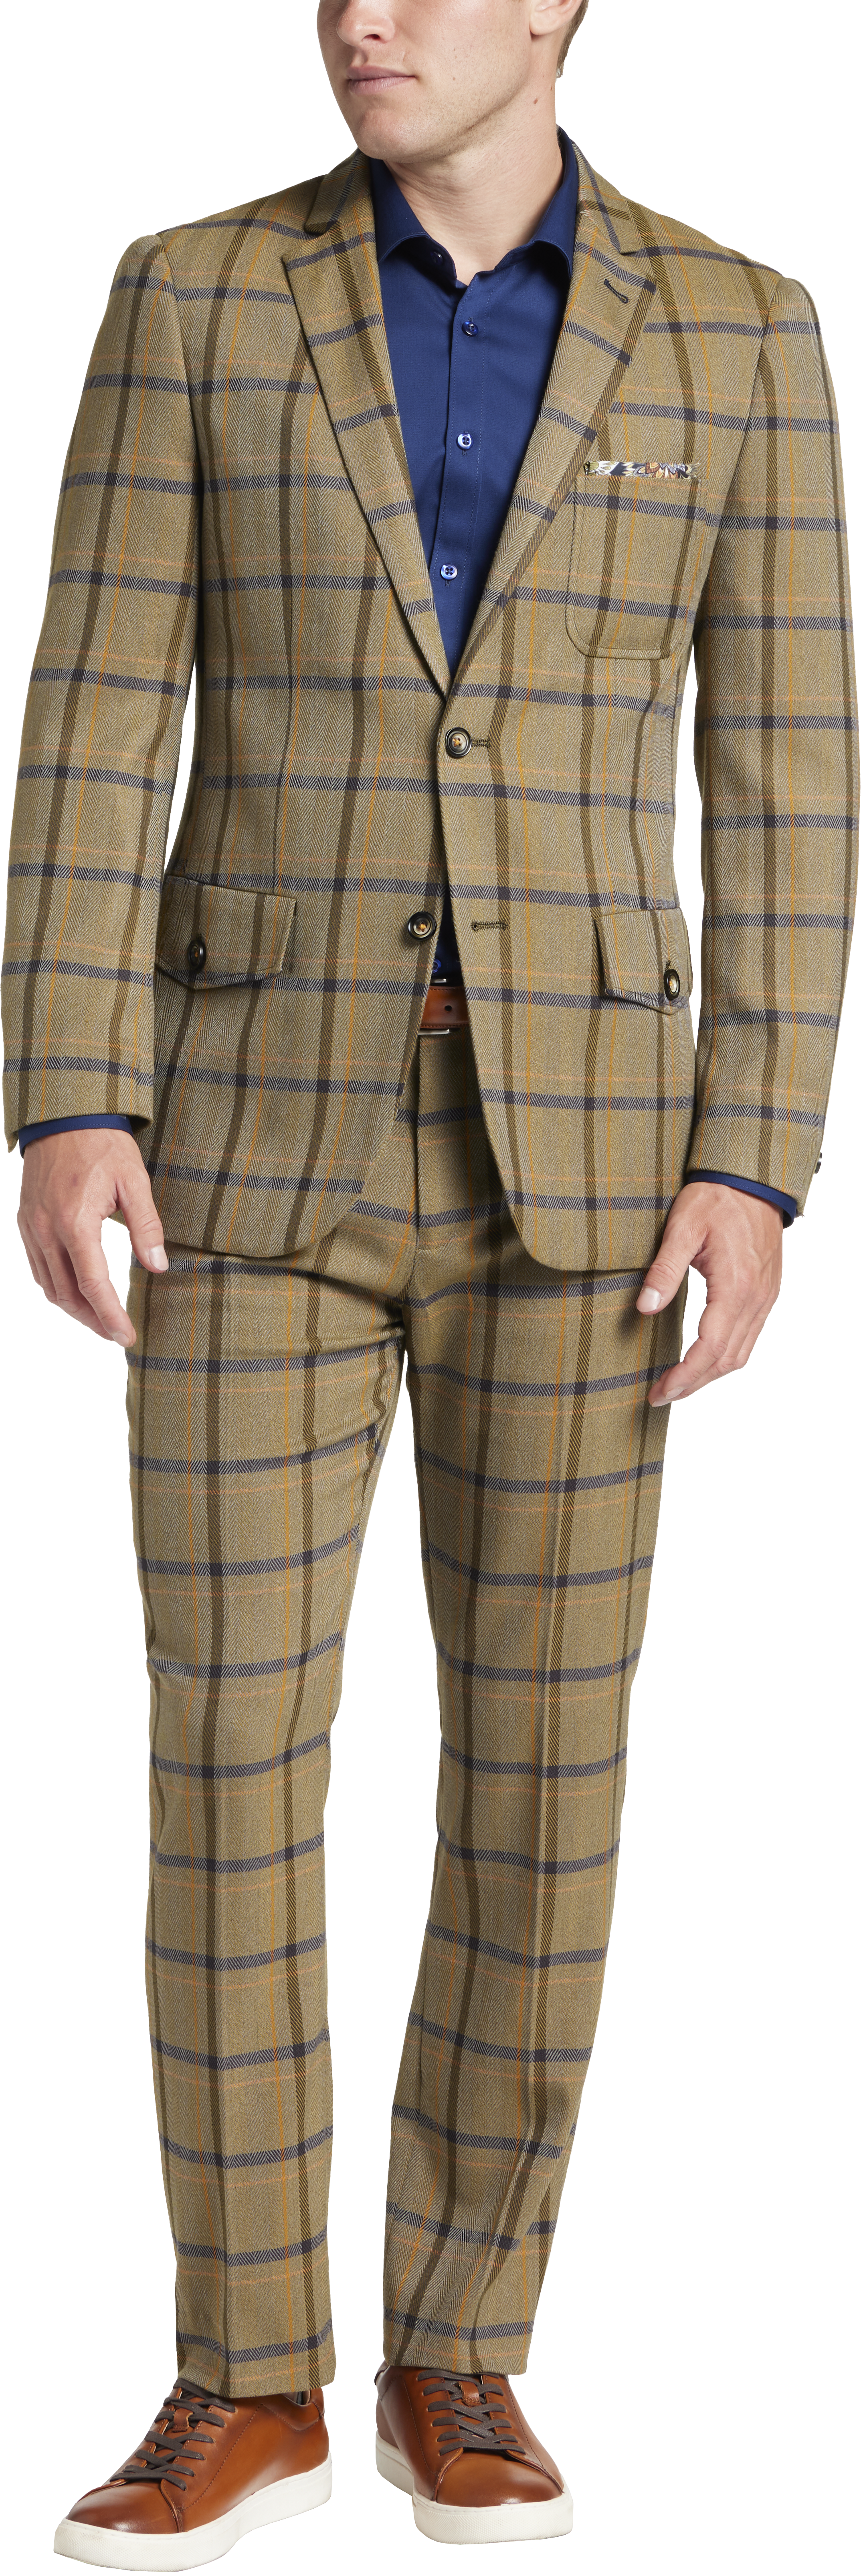 Slim Fit Herringbone Plaid Suit Separates Jacket